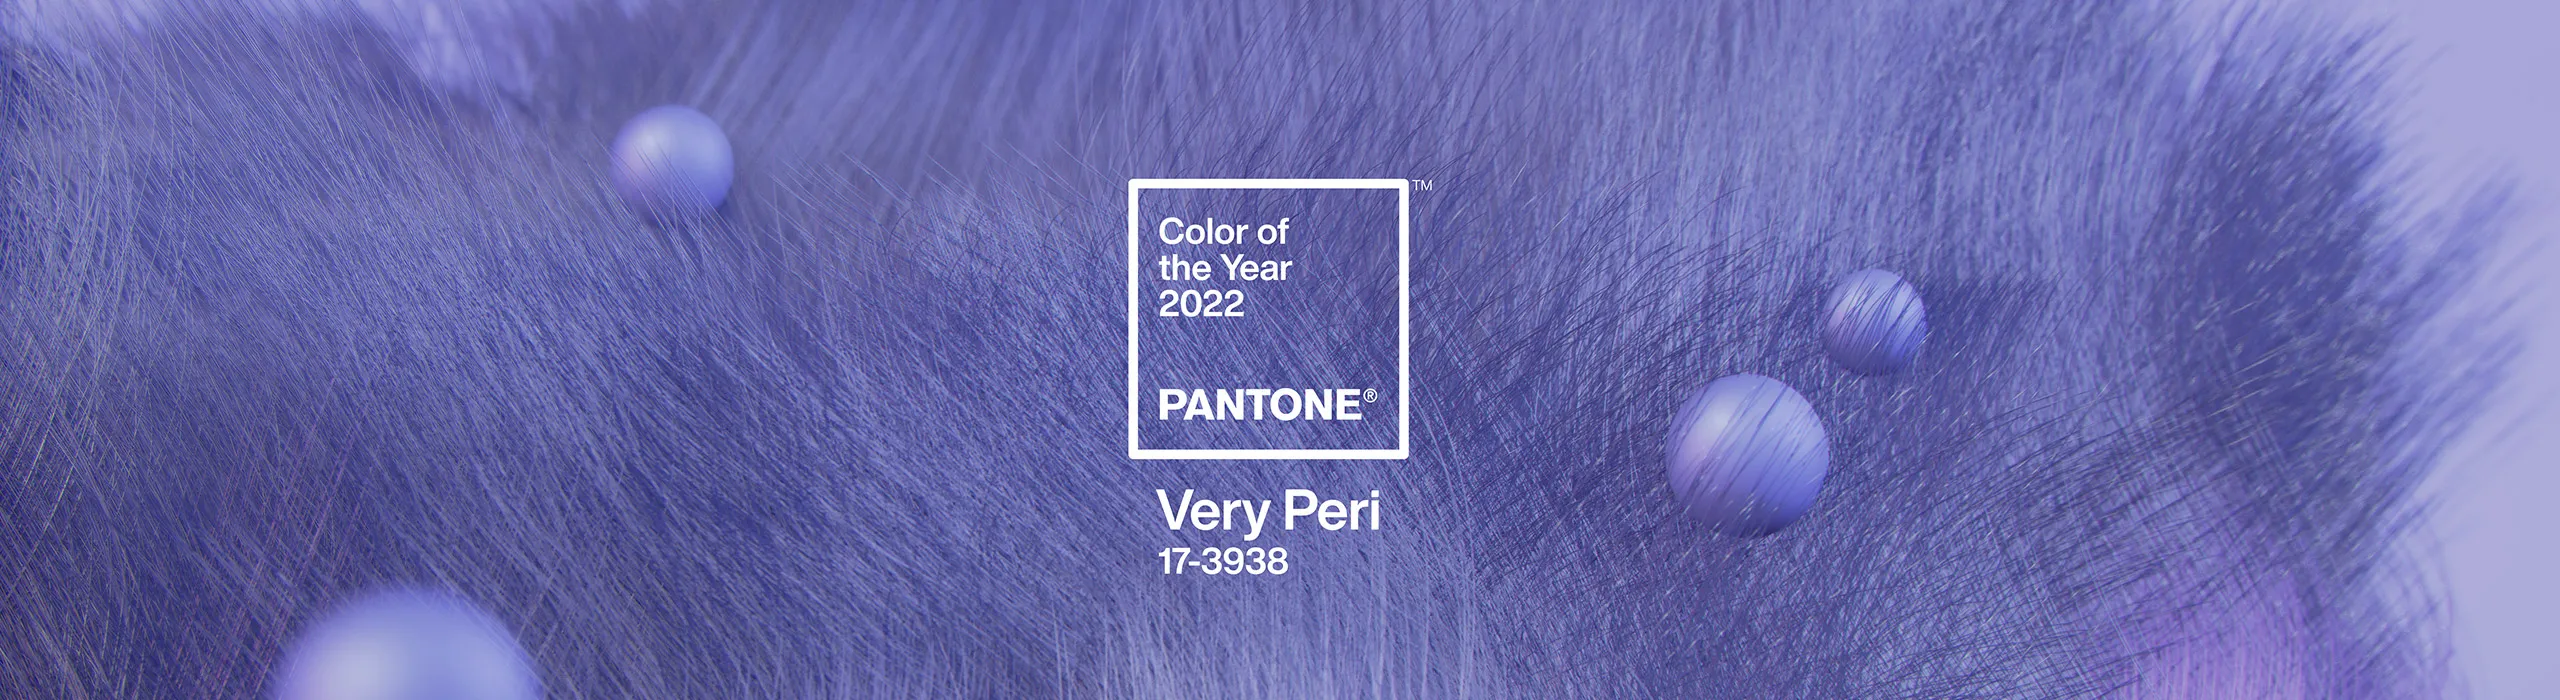 color psychology pantone 2022 very peri